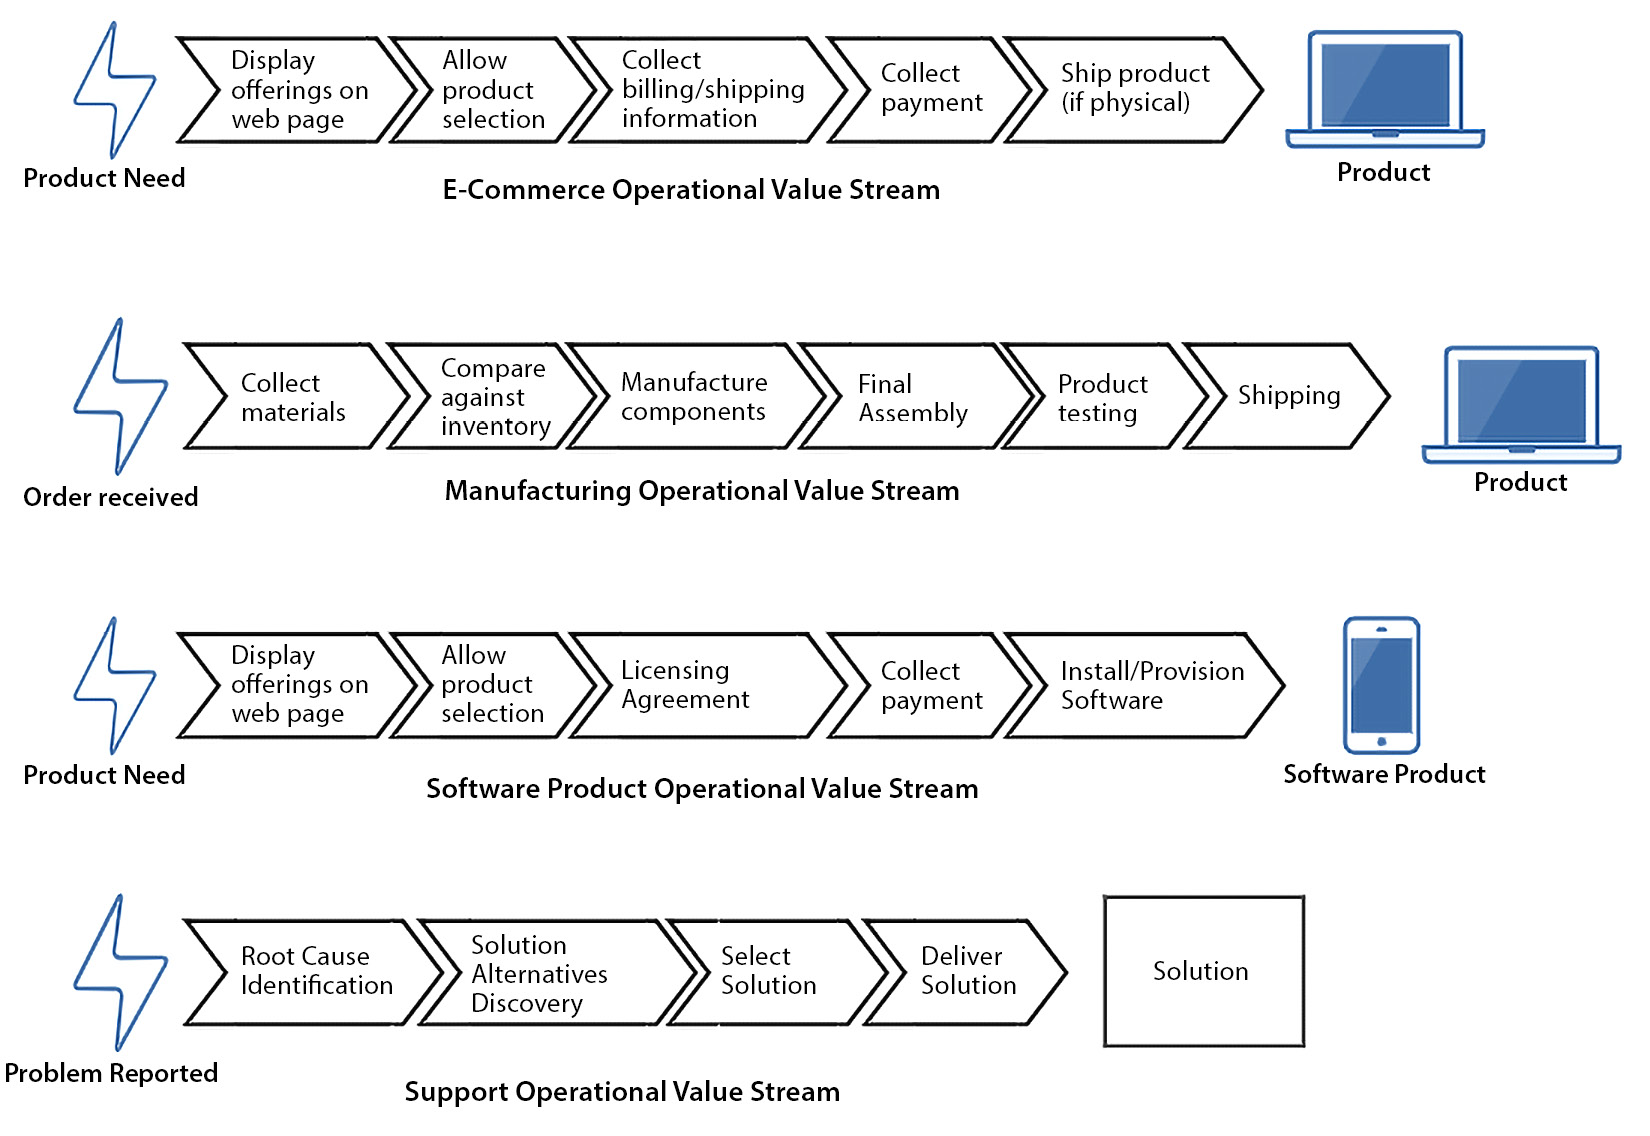 Figure 7.1 – Example operational value streams